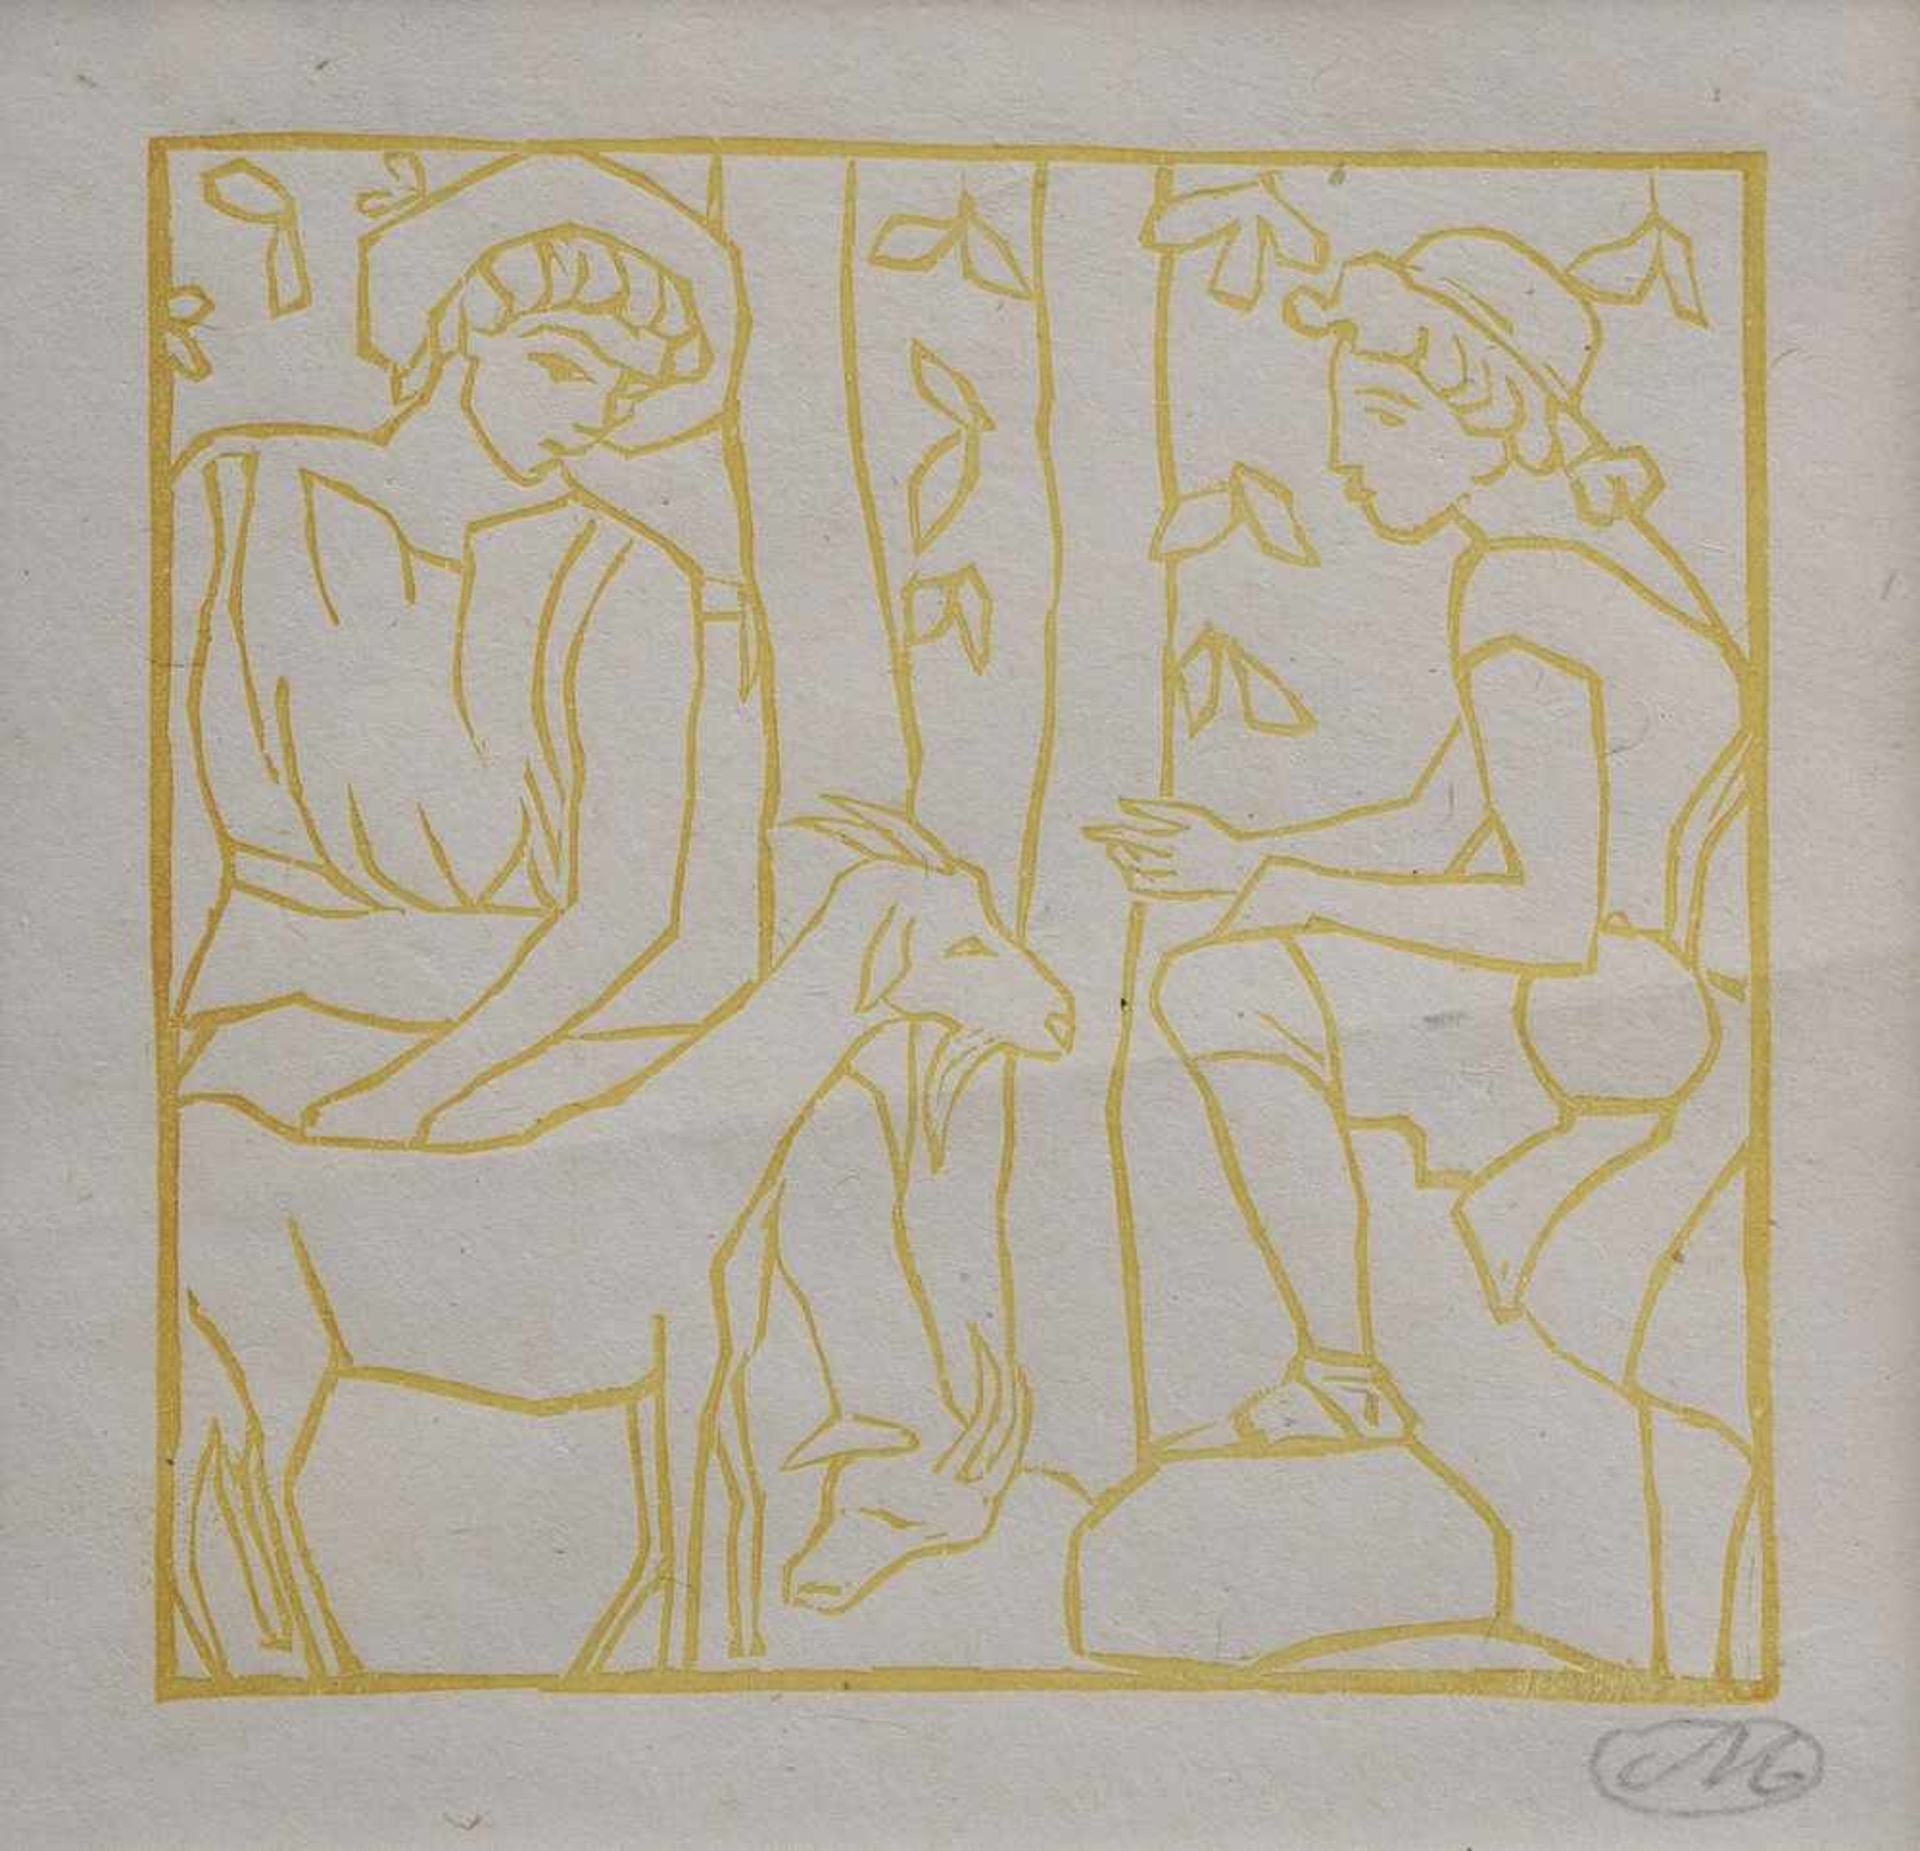 Maillol, Aristide (1861-1944) "Daphnis und Chloe" 1937, Holzschnitt in gelb, u.r.monogr., 10x10cm (